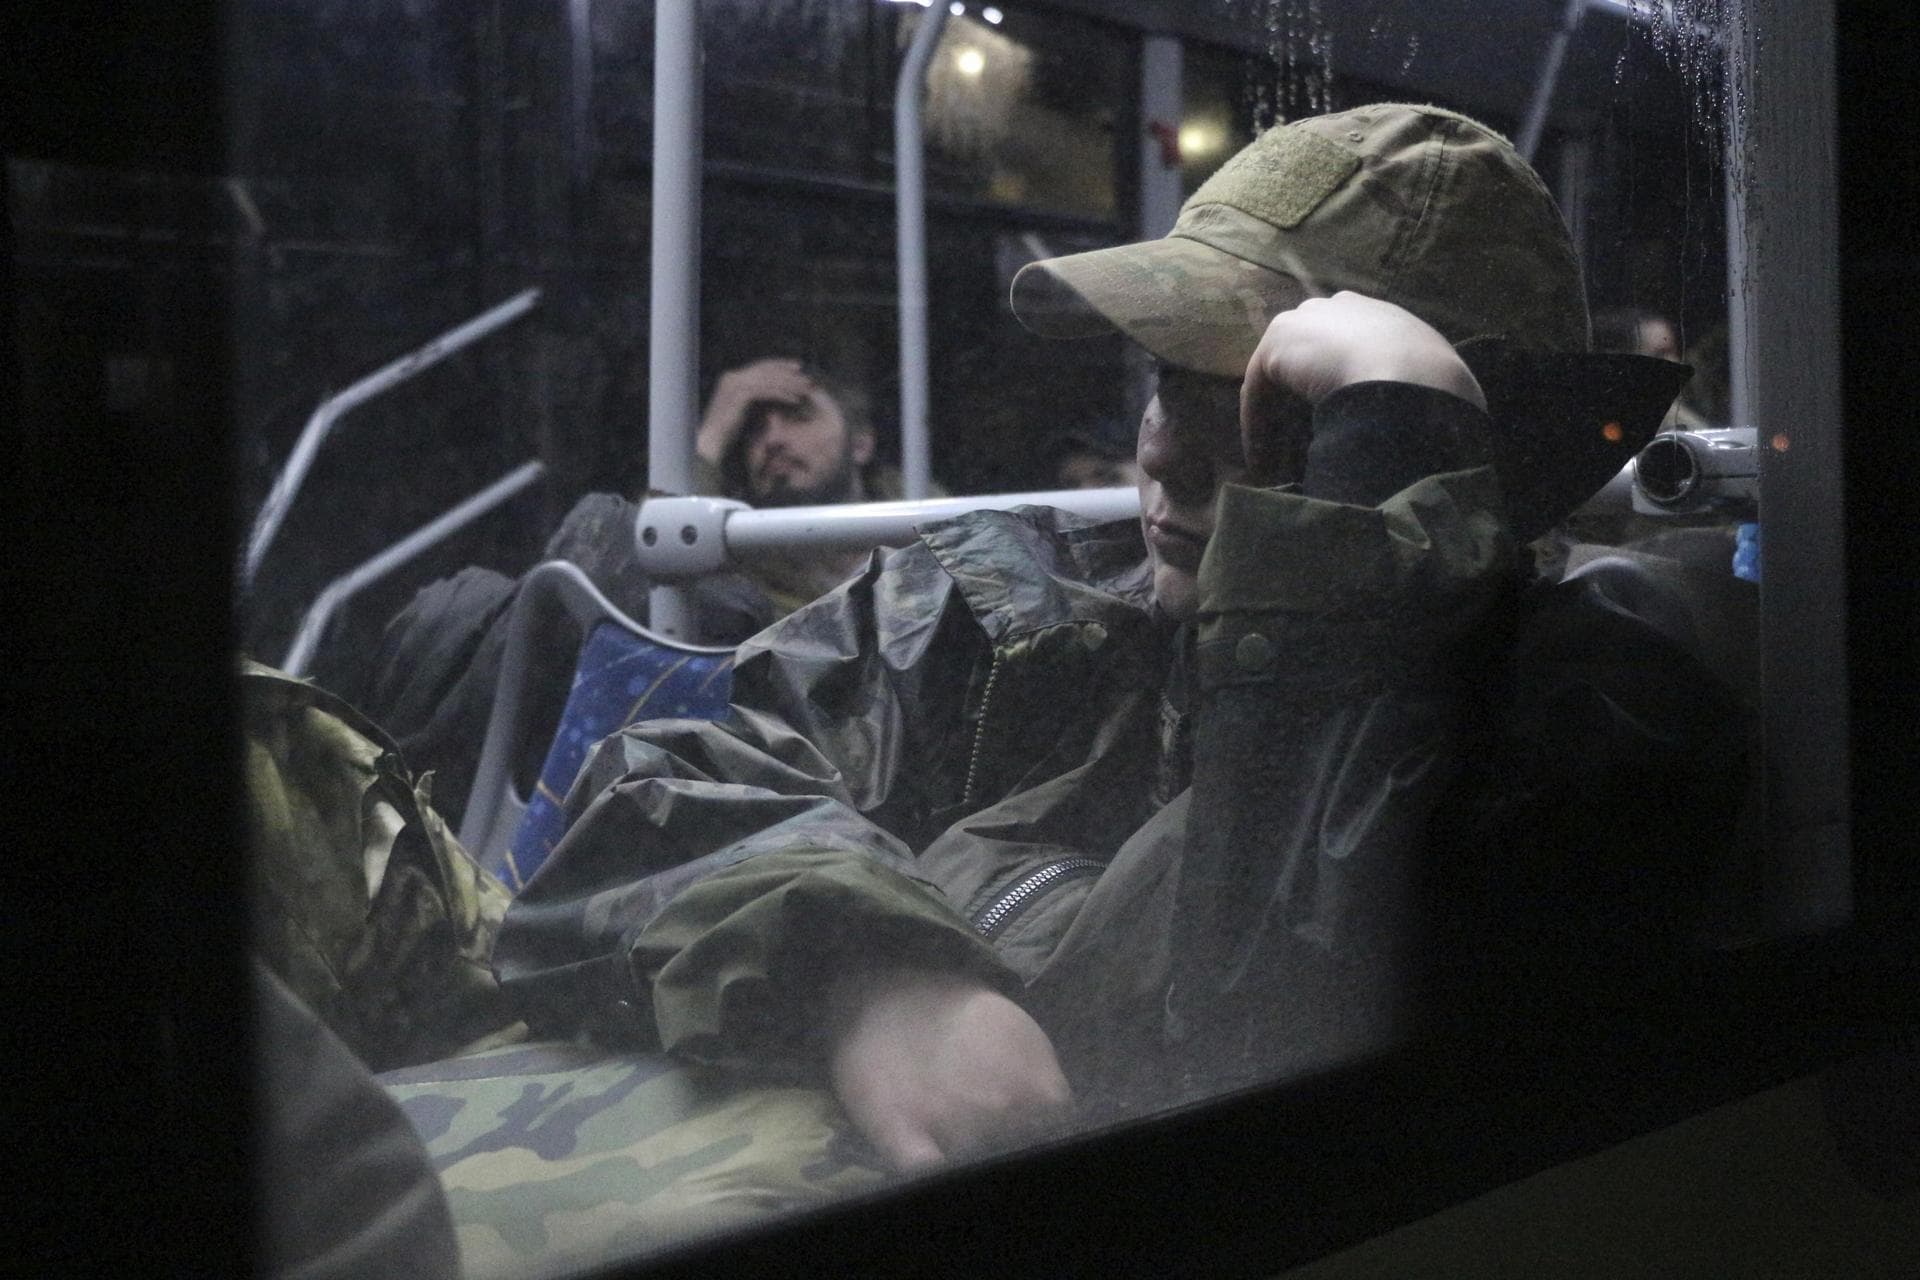 Ukrainian servicemen sit in a bus after leaving Mariupol's besieged Azovstal steel plant